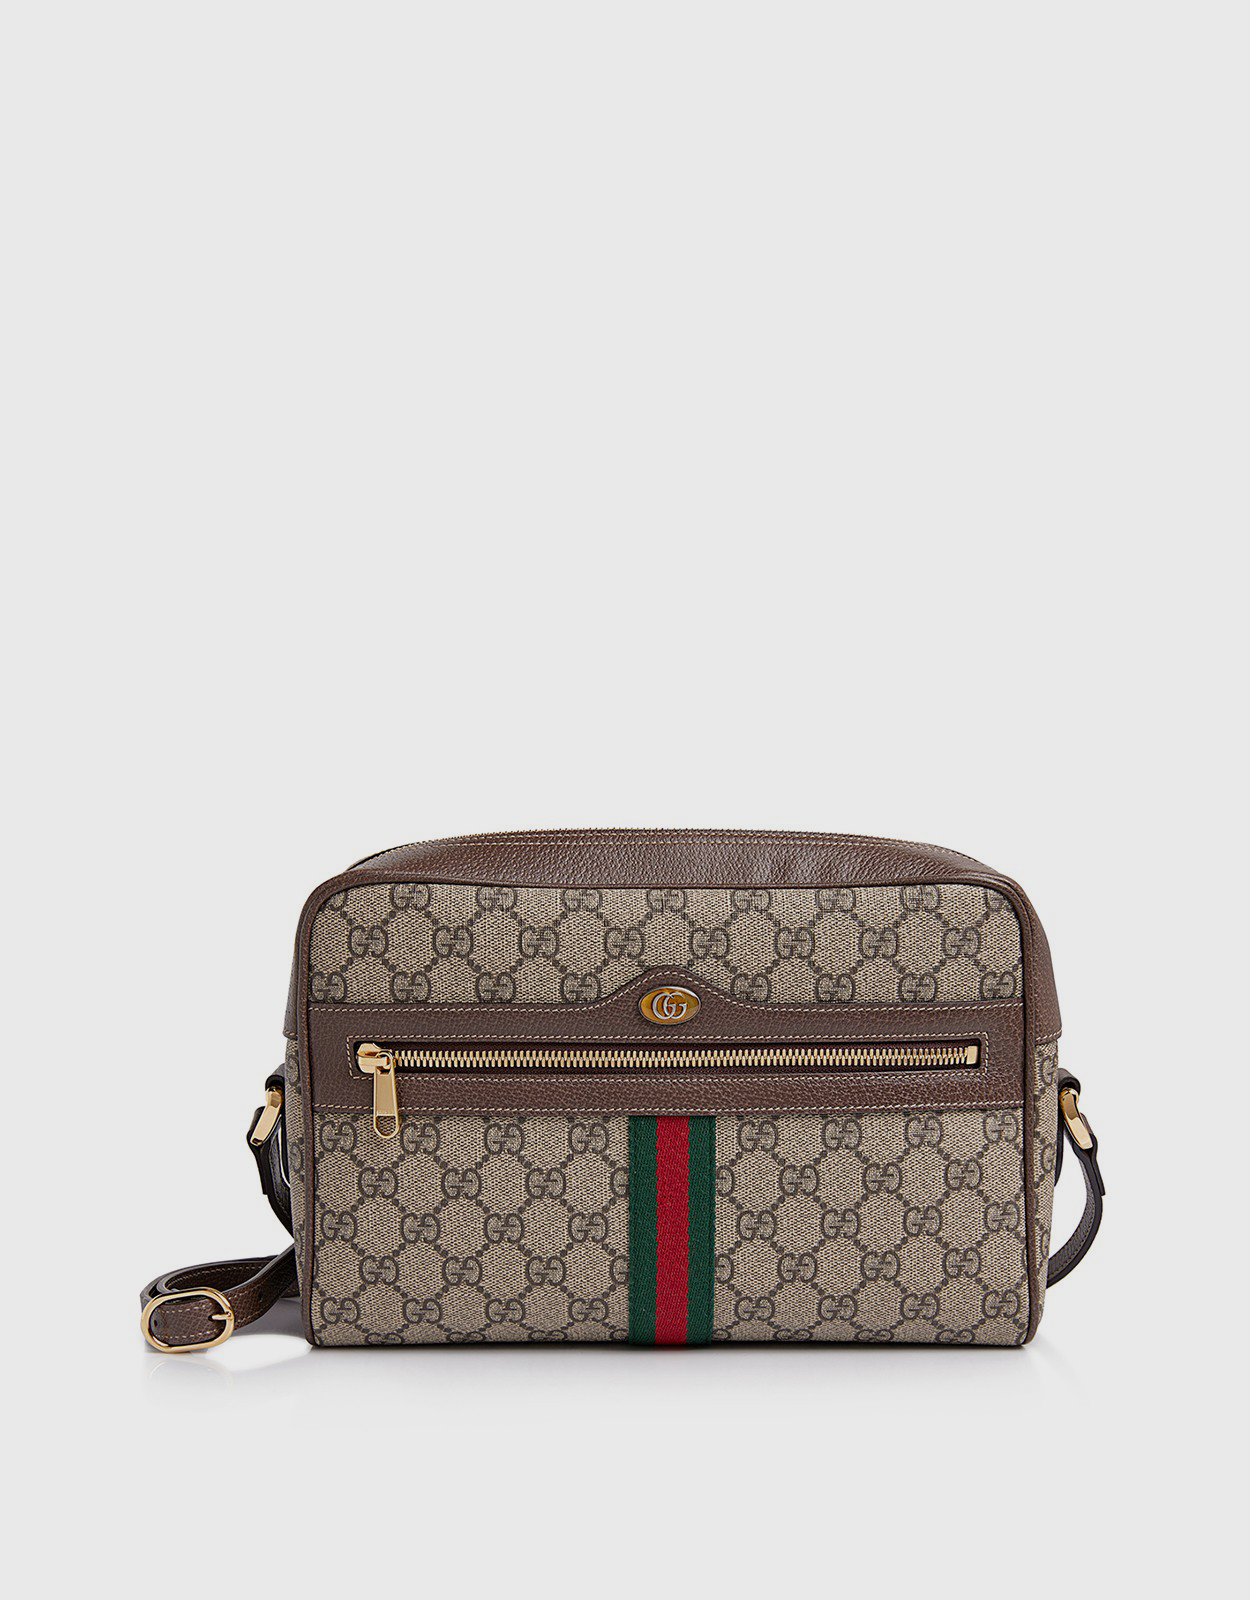 Gucci Ophidia GG Supreme small shoulder bag (Shoulder bags,Cross Body Bags)  IFCHIC.COM